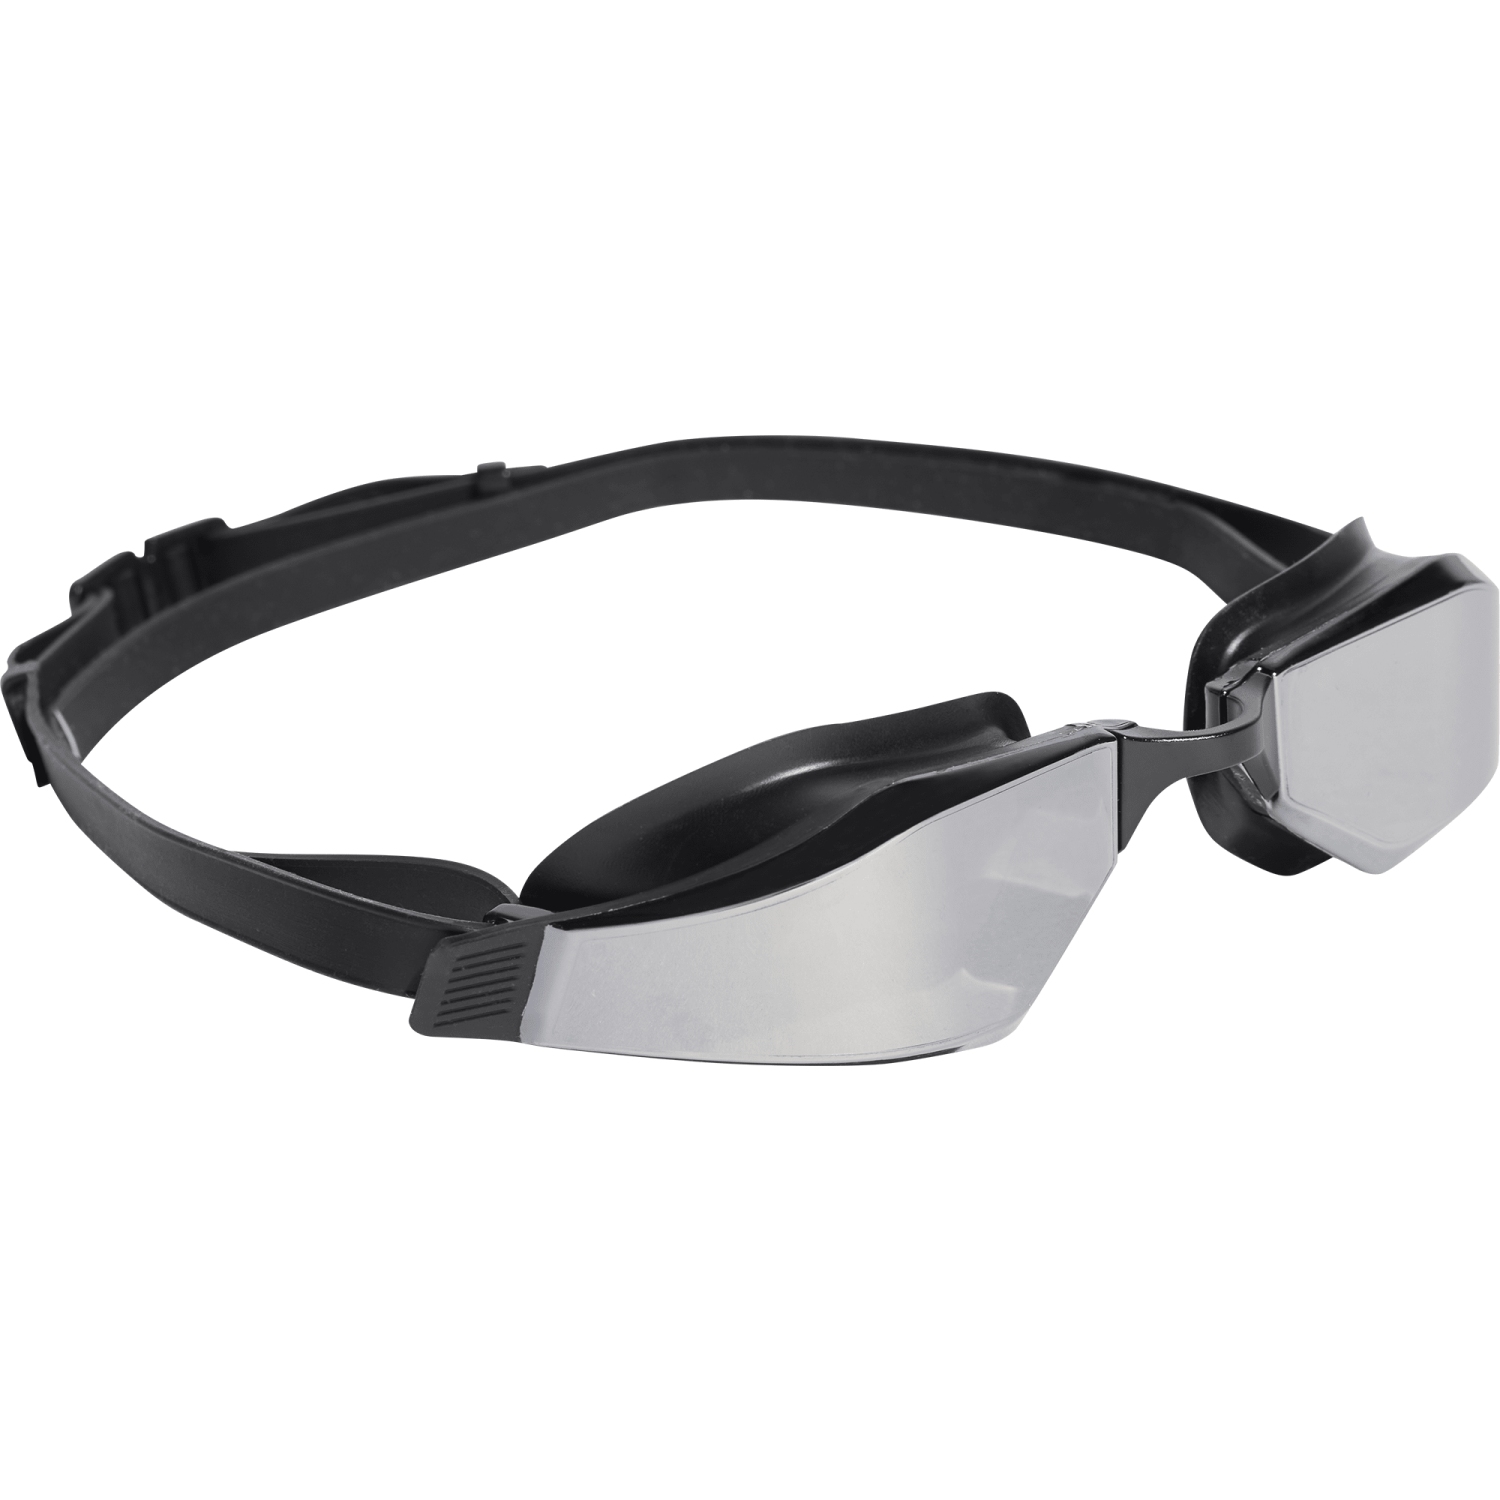 Productfoto van adidas Ripstream Speed Zwembril - black/carbon IK9658 - gespiegeld